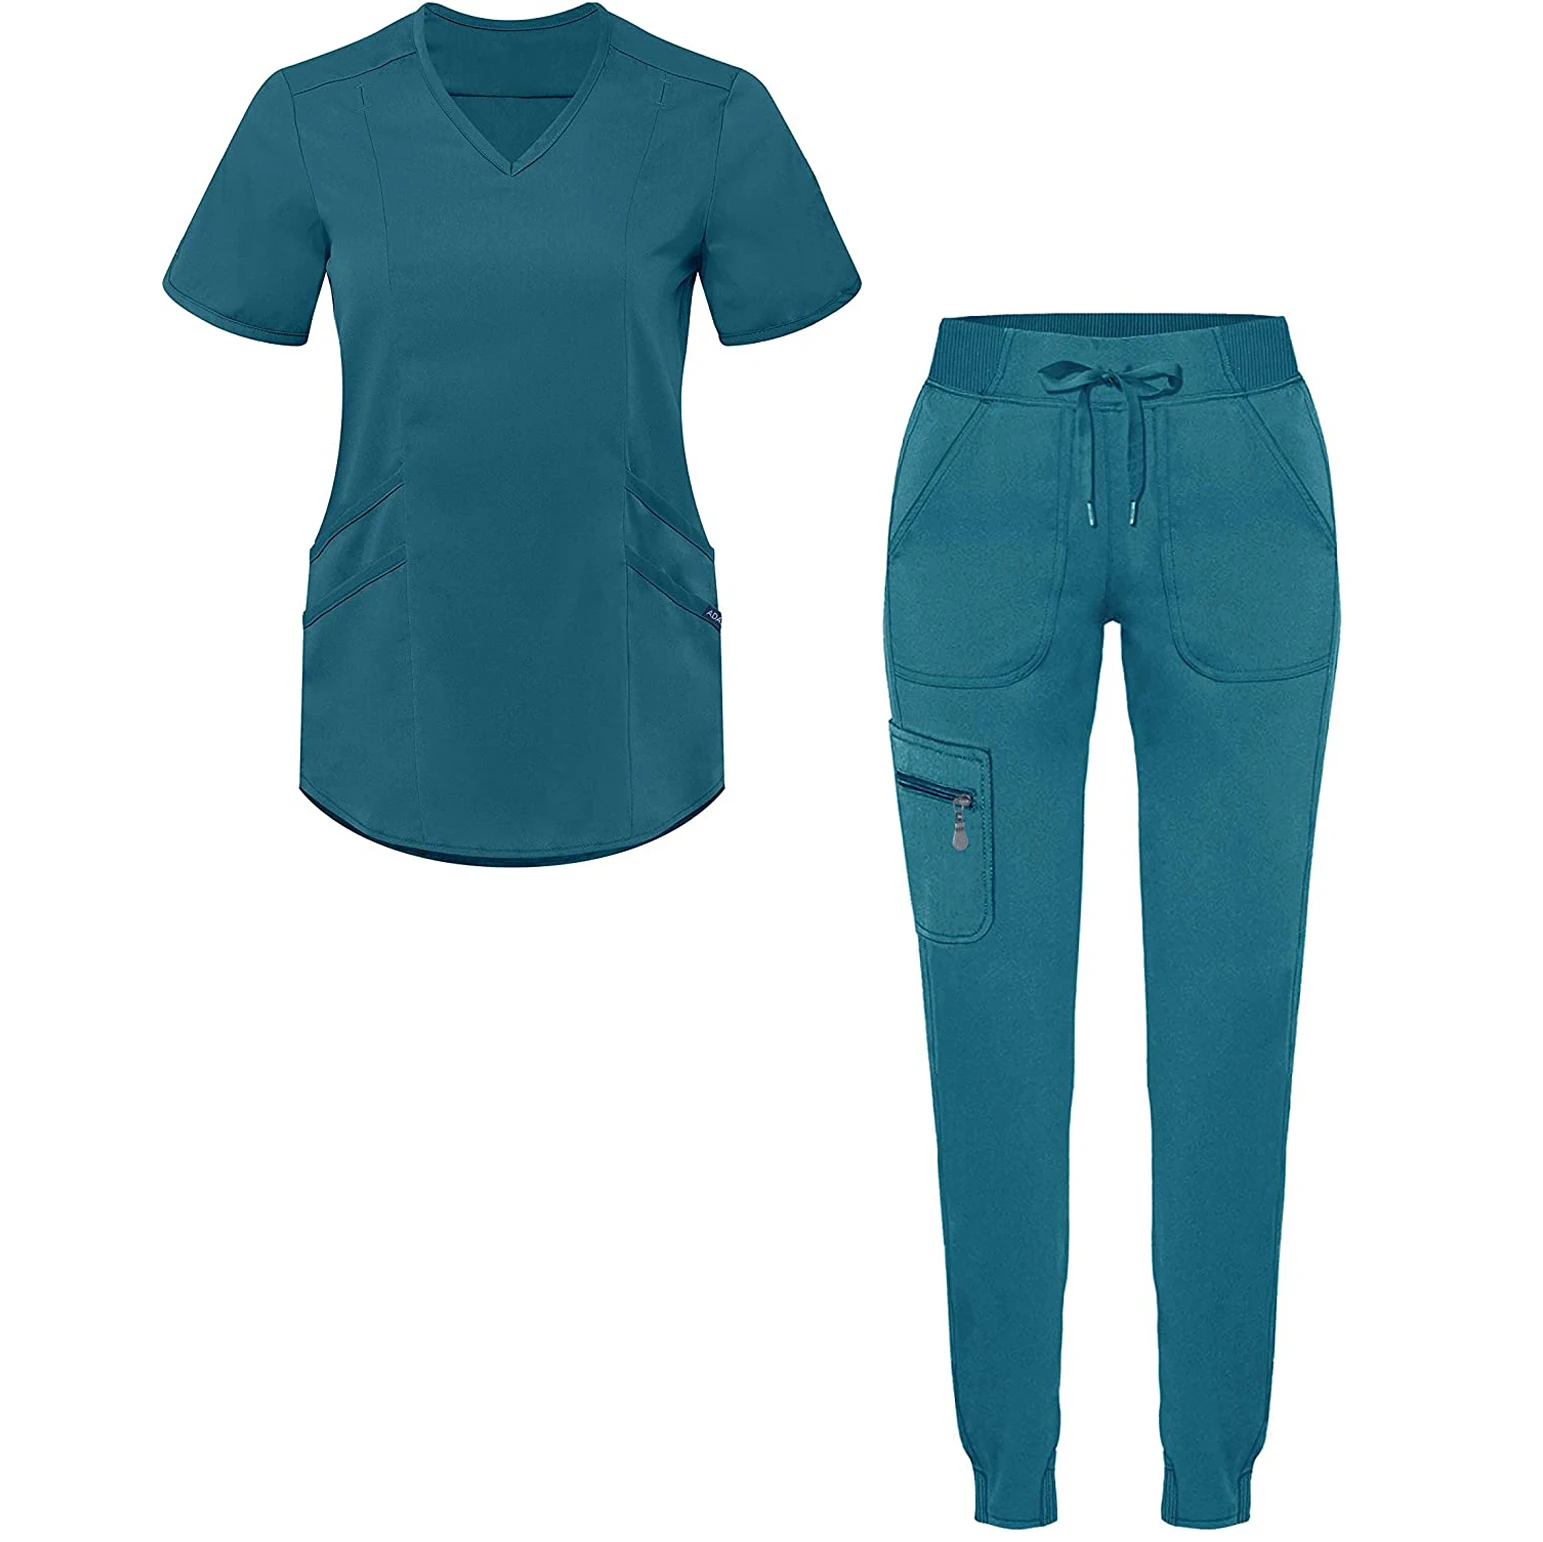 Customized Wholesale Uniforms Design Your Own Uniforms Women Joggers Set Uniforms scrubs for custom printing